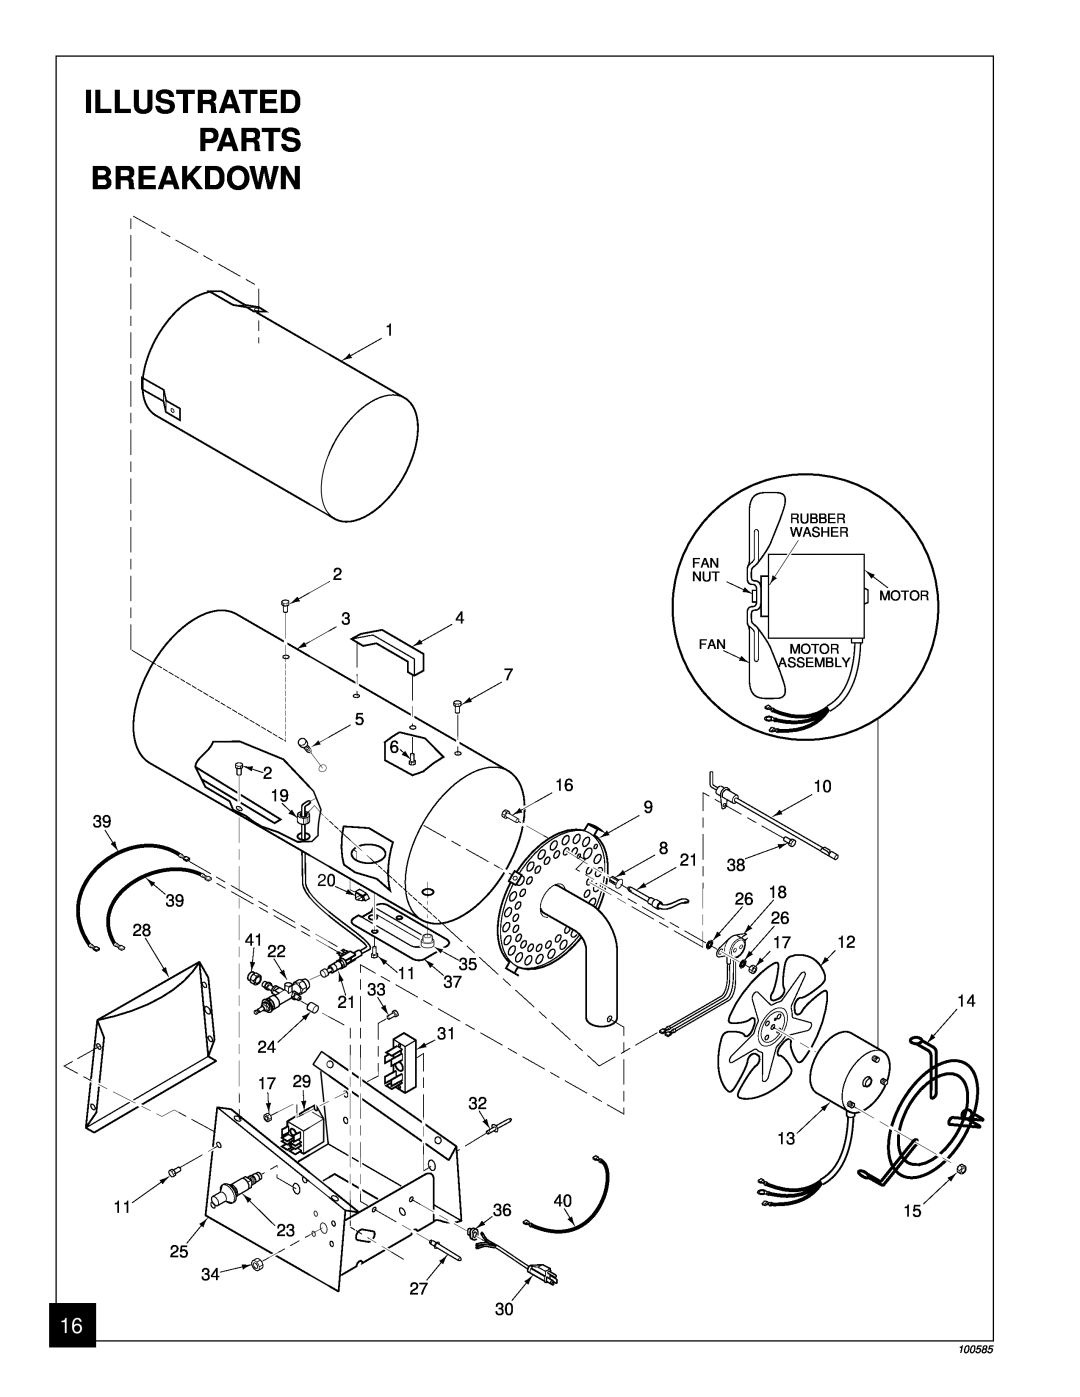 Desa BLP155AT owner manual Illustrated, Parts, Breakdown, Rubber, Washer, Motor 